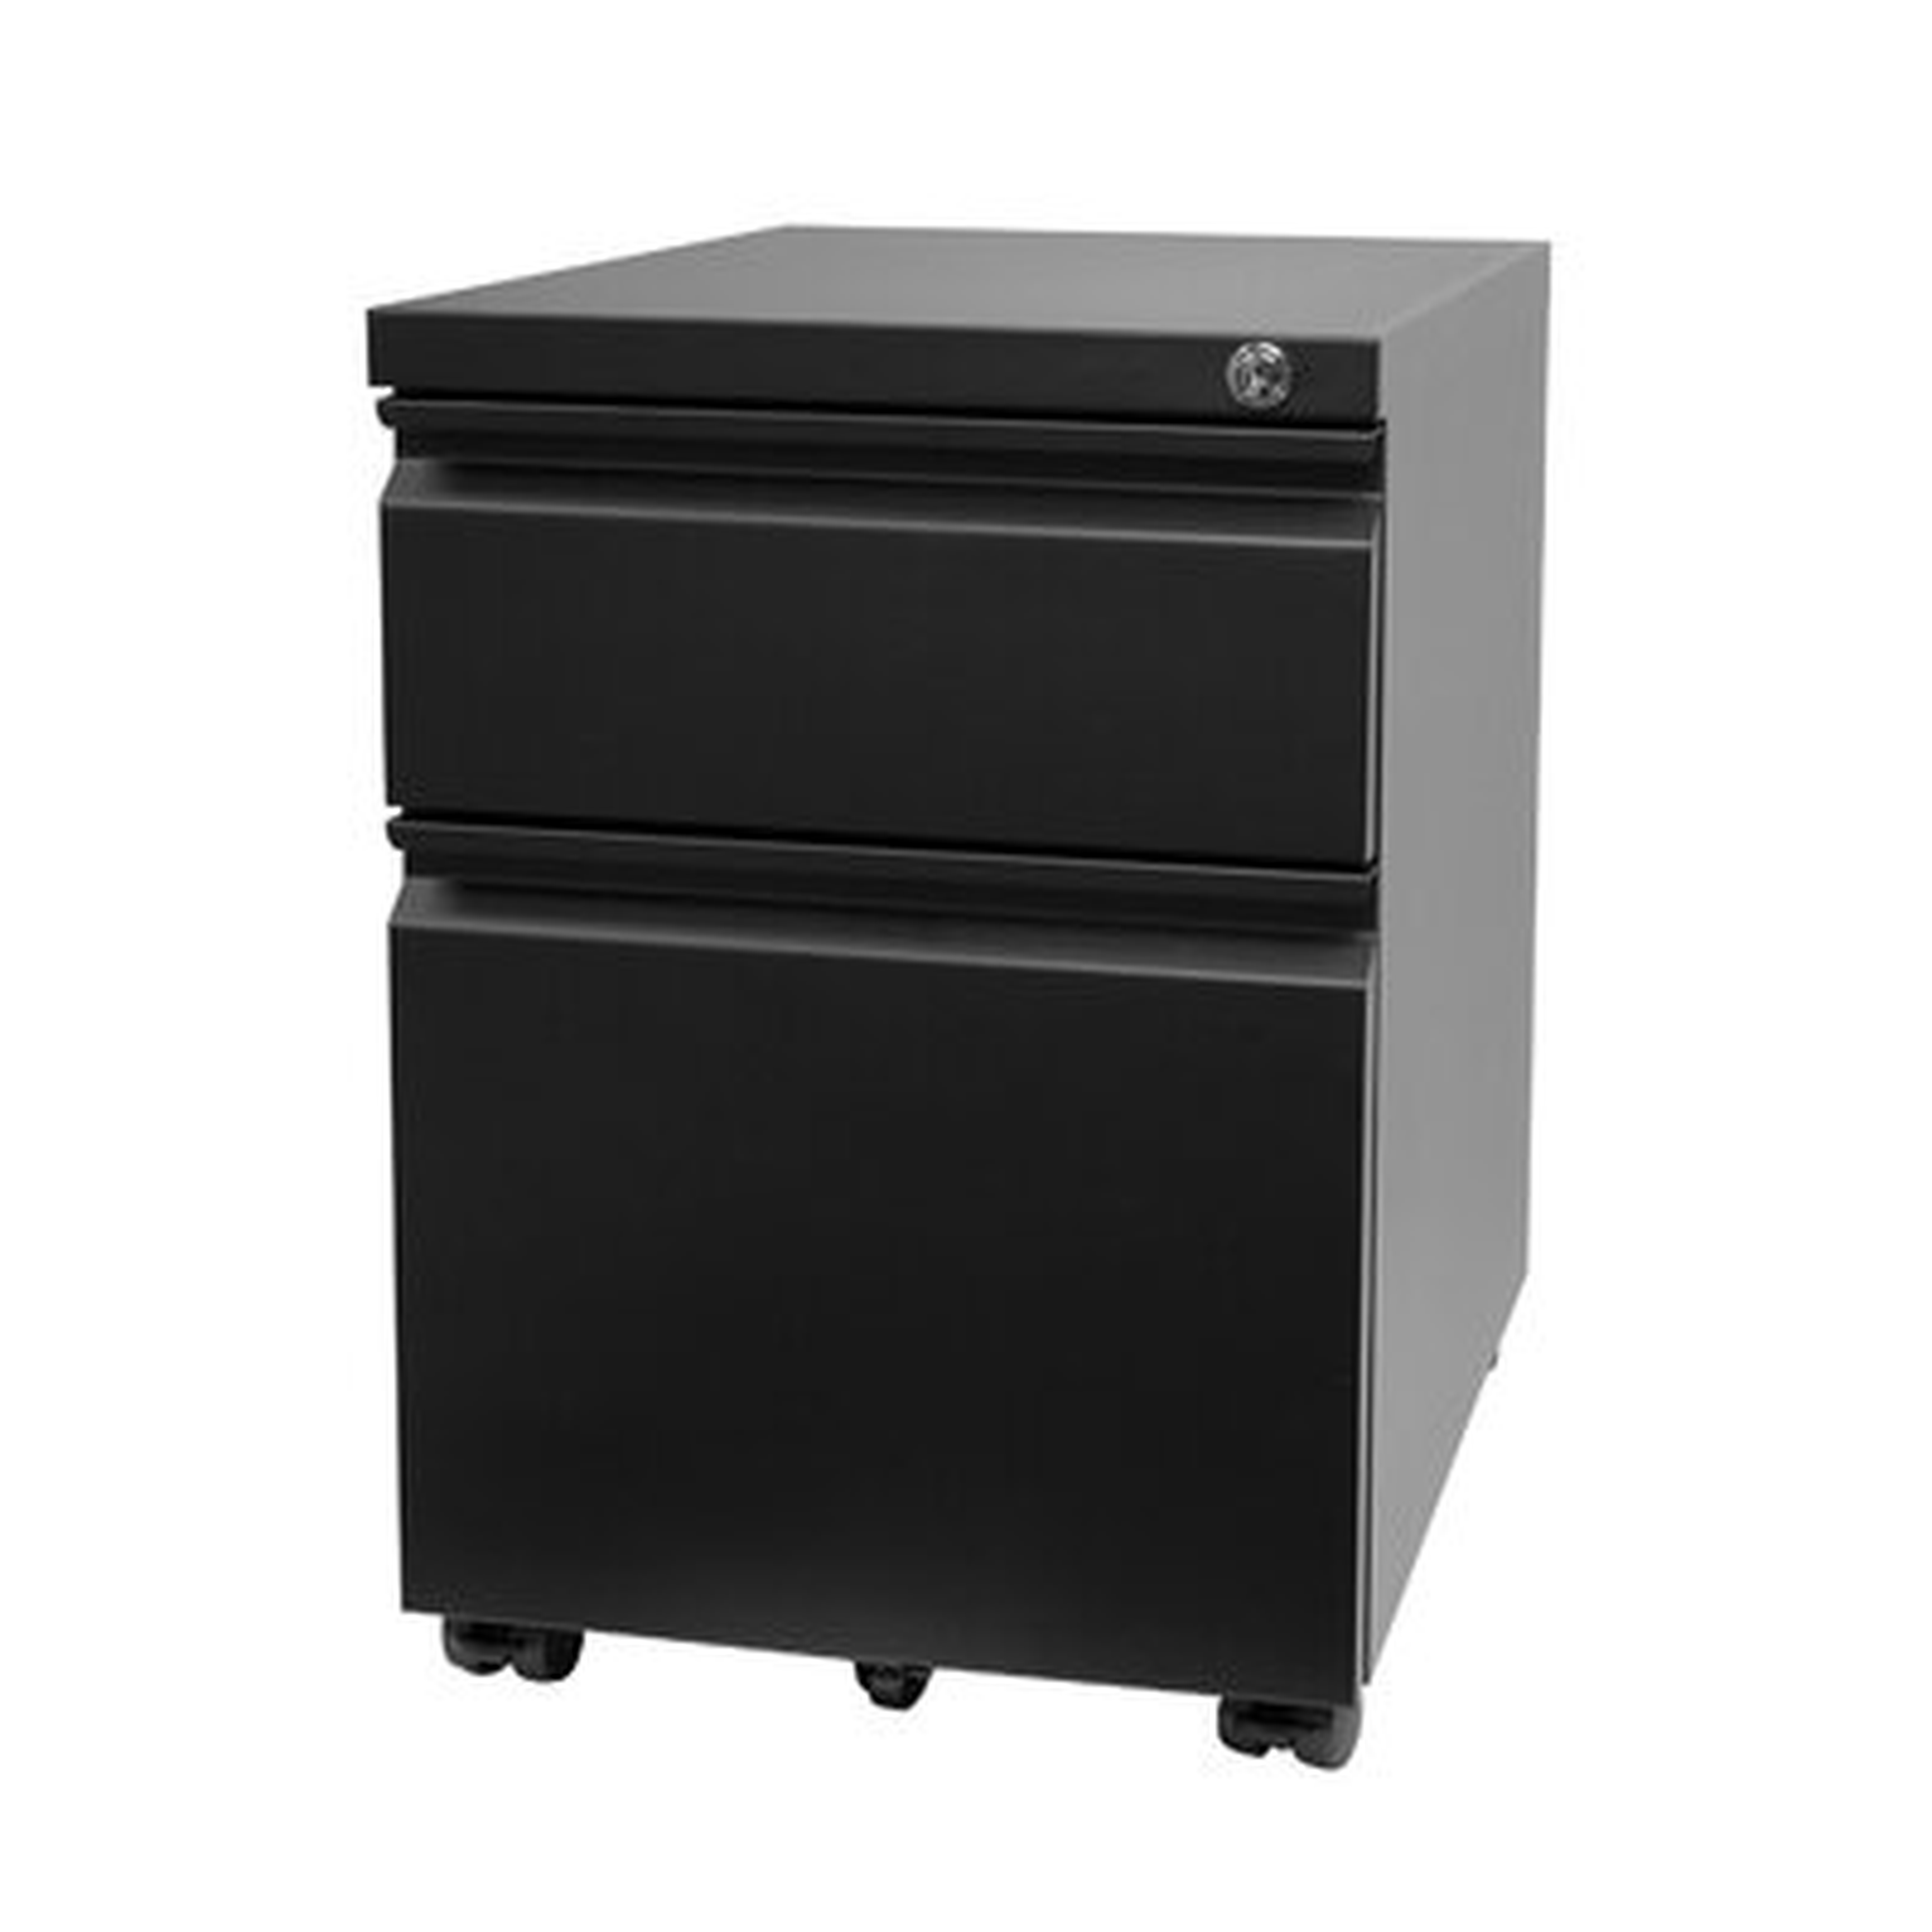 2 Drawer Rolling File Cabinet, Mobile File Cabinet For Under Desk, Metal Filing Cabinet With Lock For Letter, Legal, A4 File - Wayfair